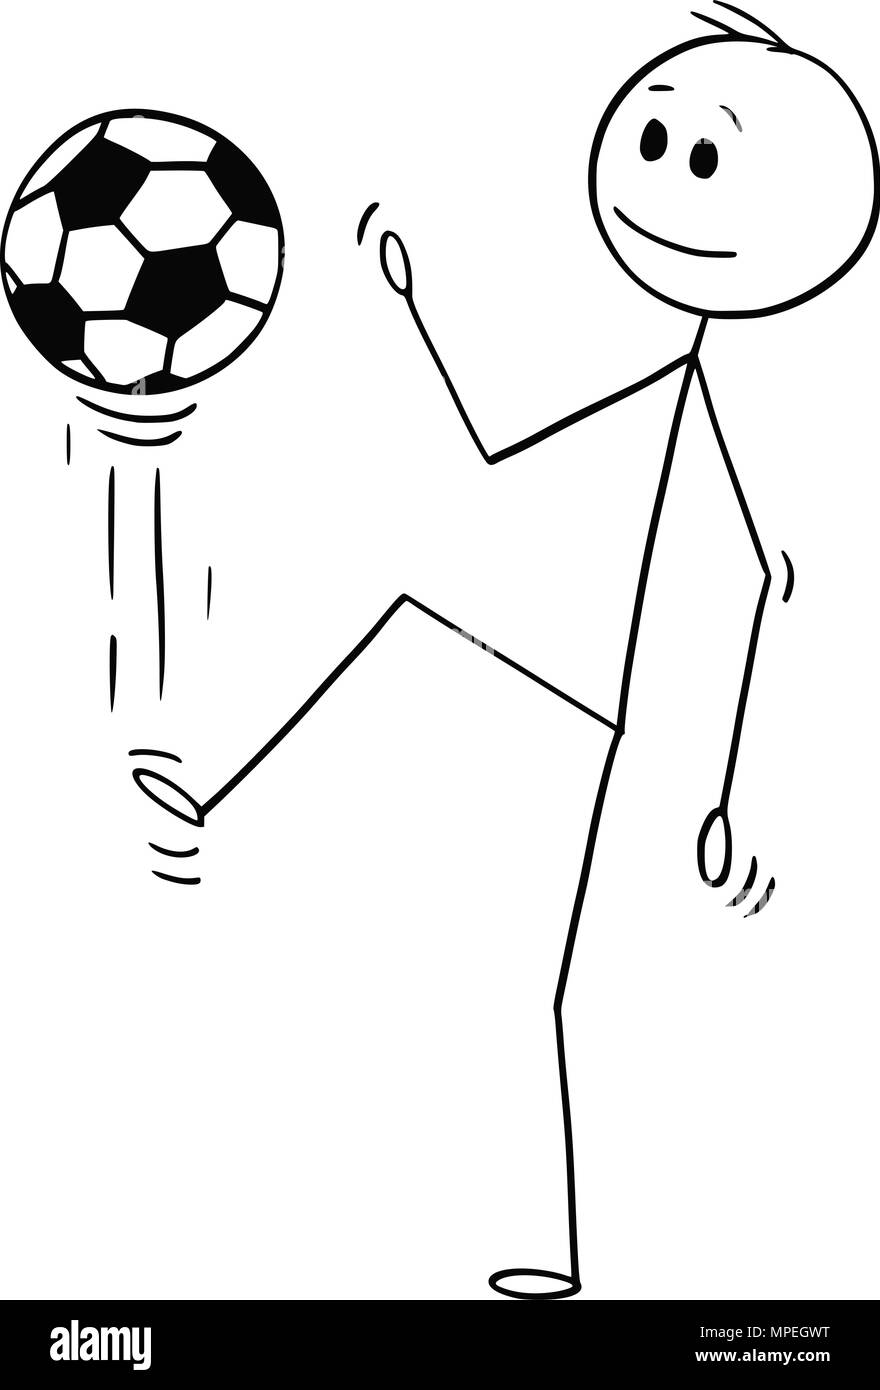 Caricature de football ou soccer Player Kicking the ball Juggling ou Illustration de Vecteur